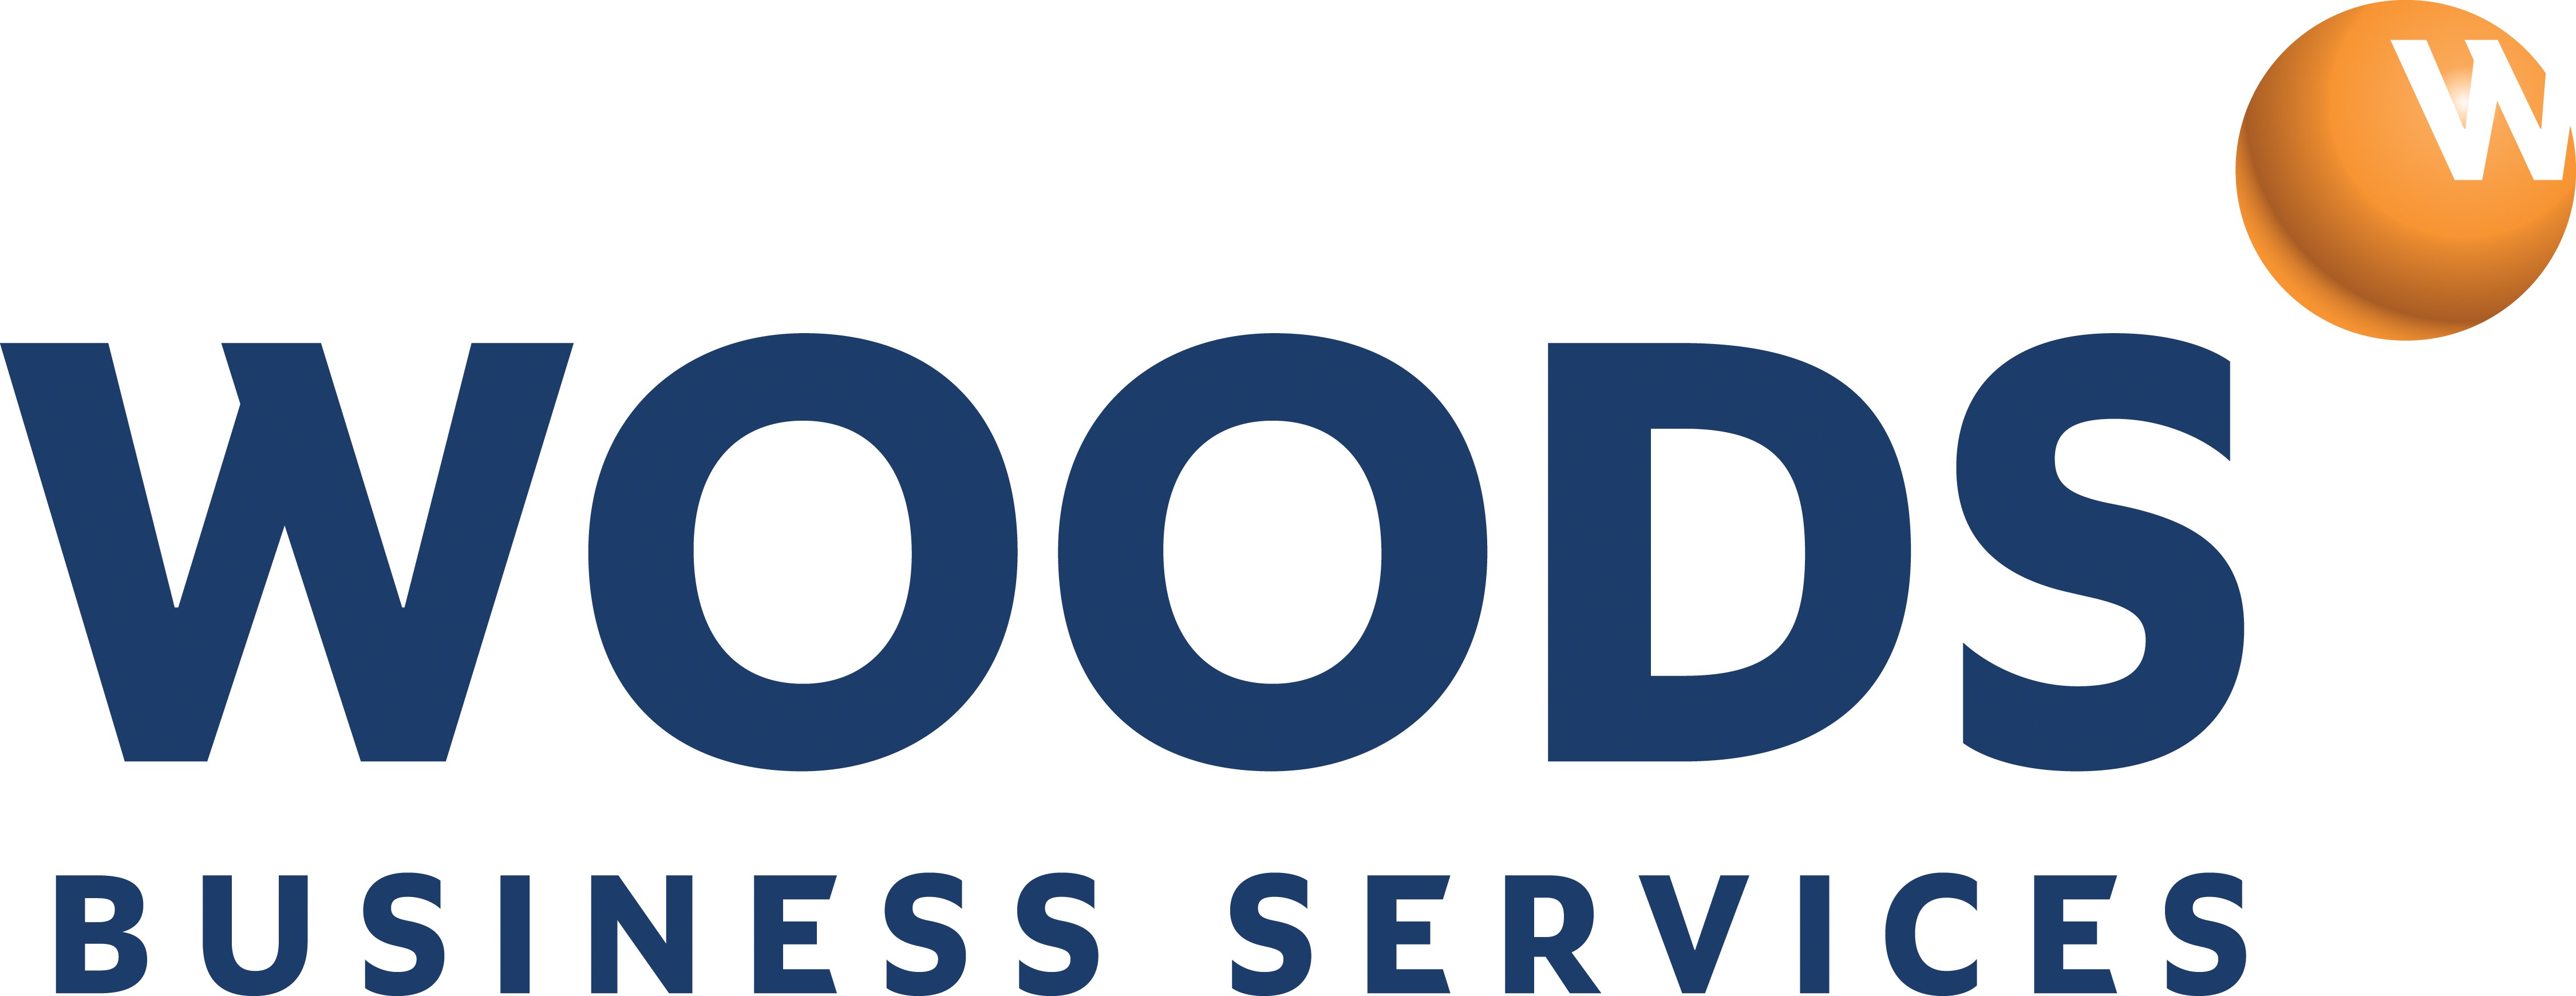 Woods Business Services | Merr IT